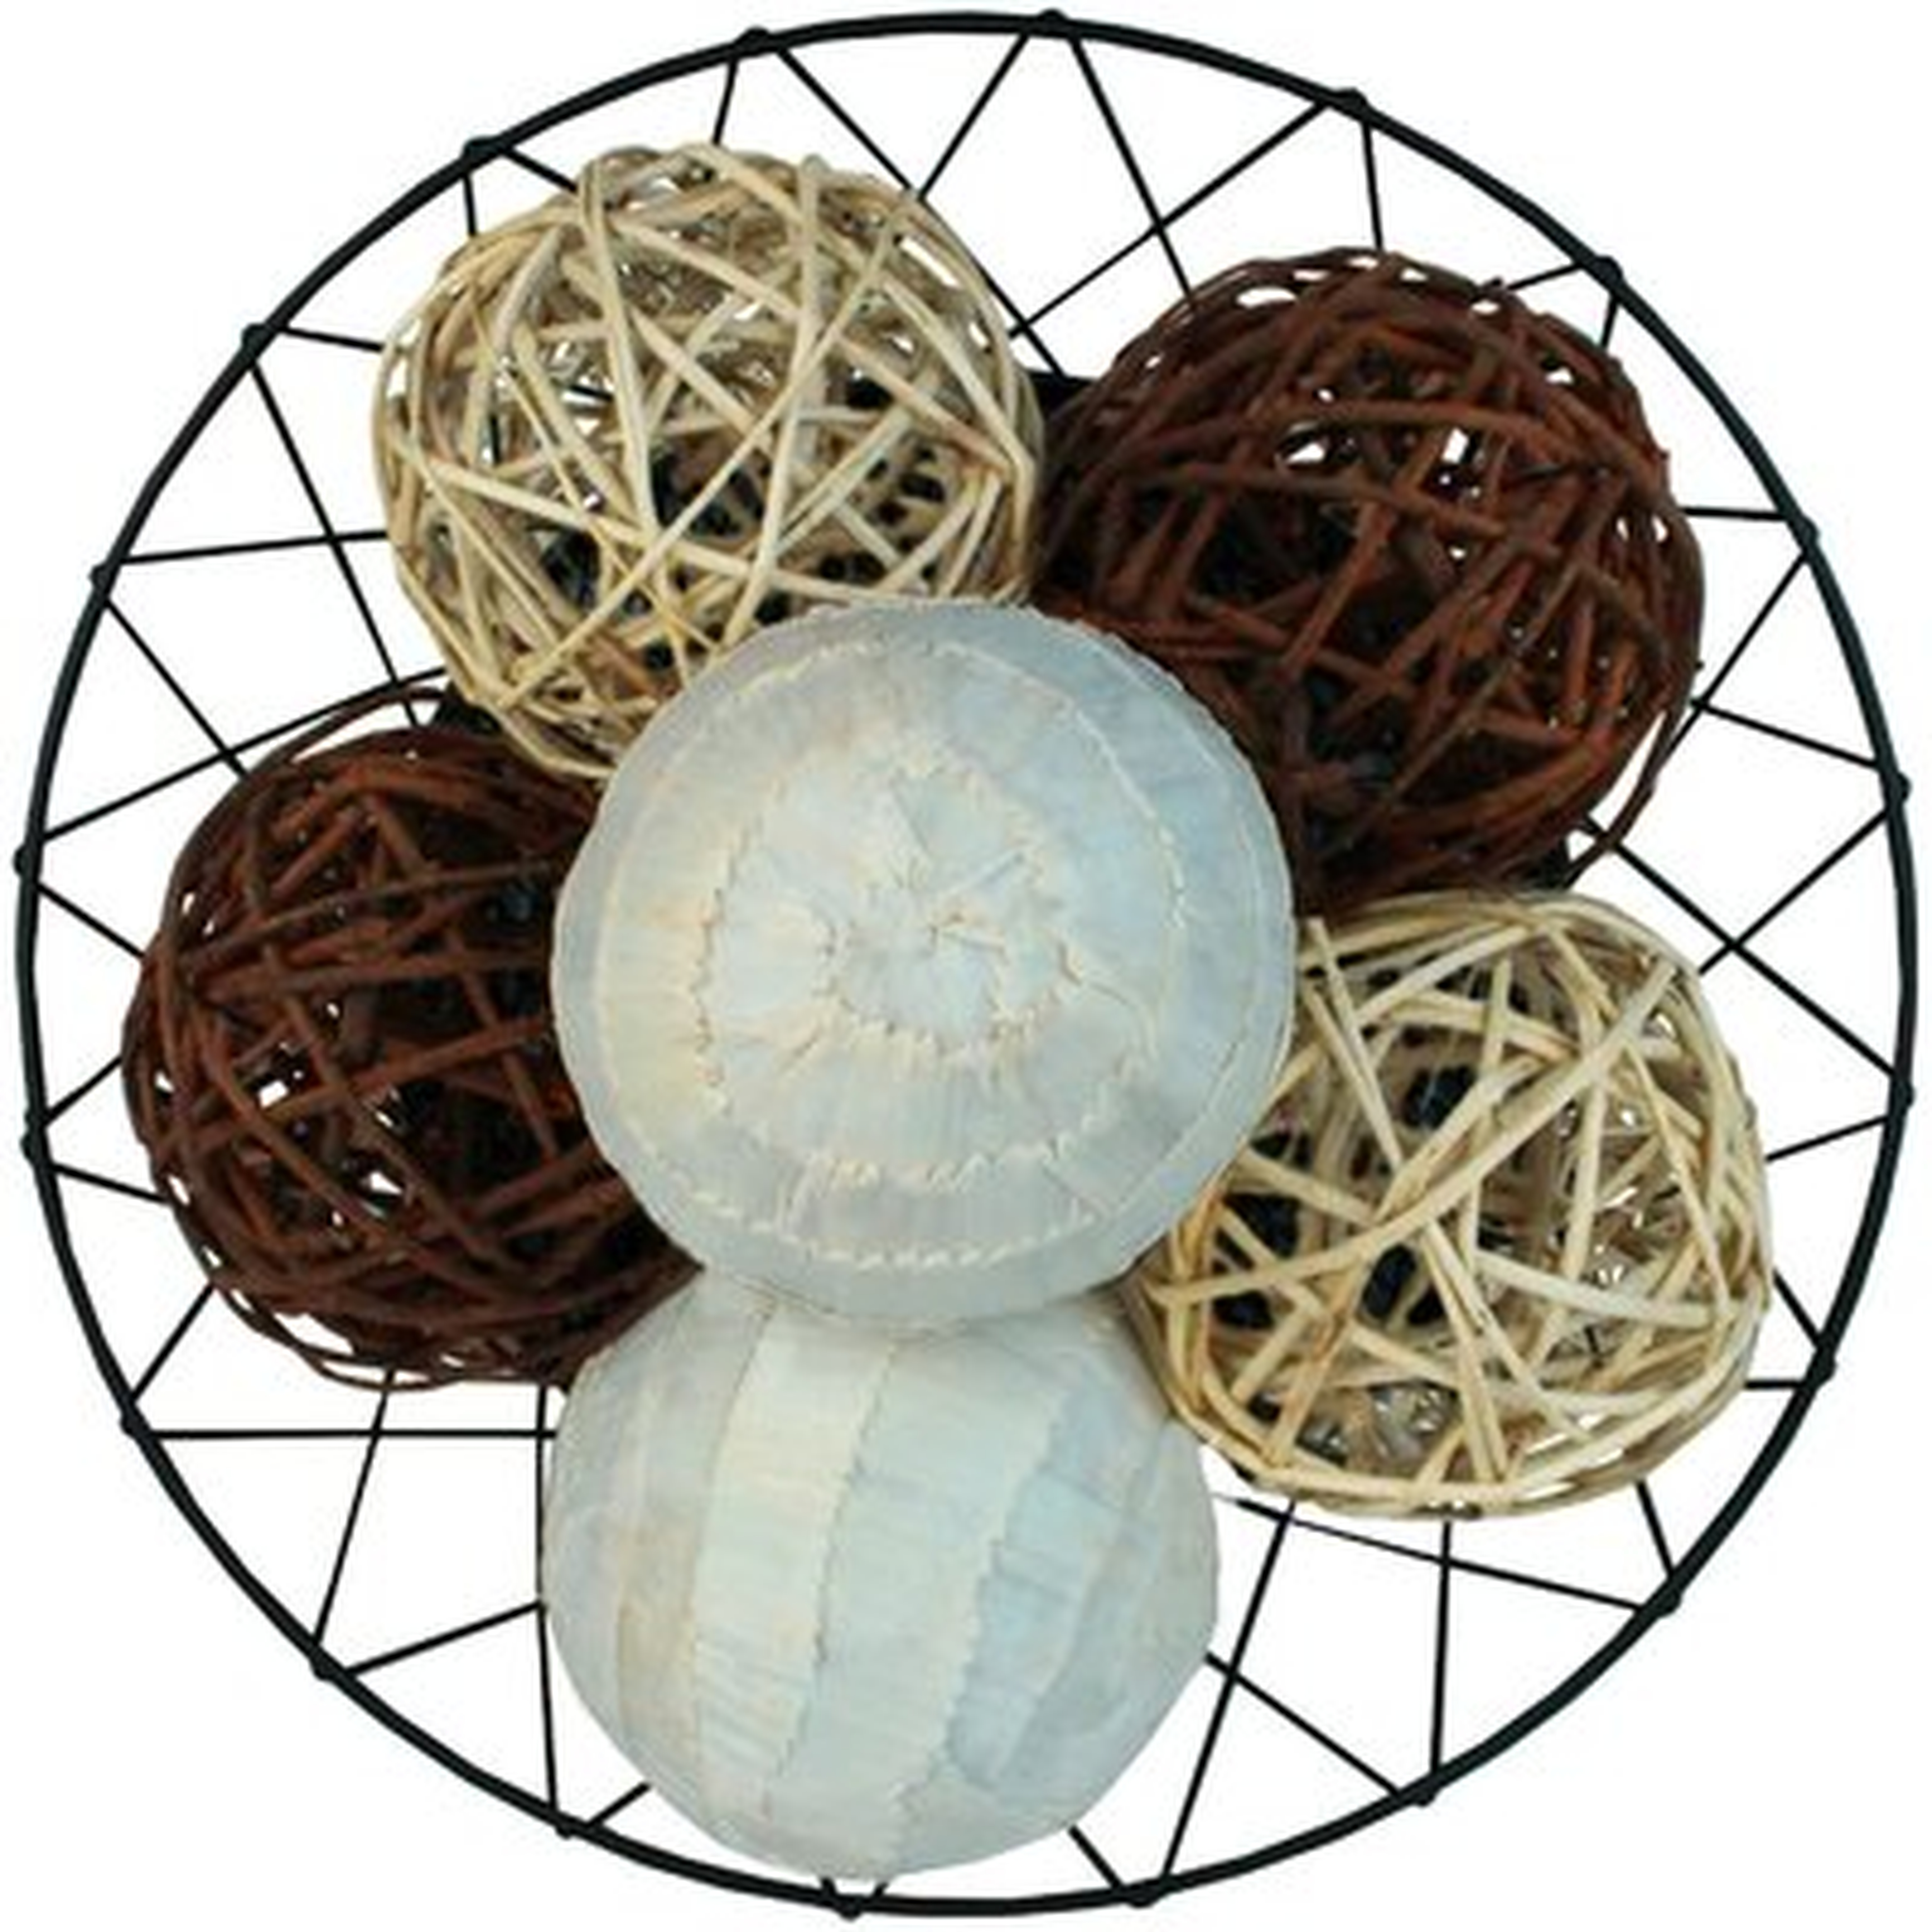 Red Barrel Studio® Decorative Balls For Bowls 4 Inch Decorative Balls For Centerpiece Bowl Fillers, Assorted Rattan Wicker Orb Balls, Vase Fillers, Brown, Pack Of 6 - Wayfair